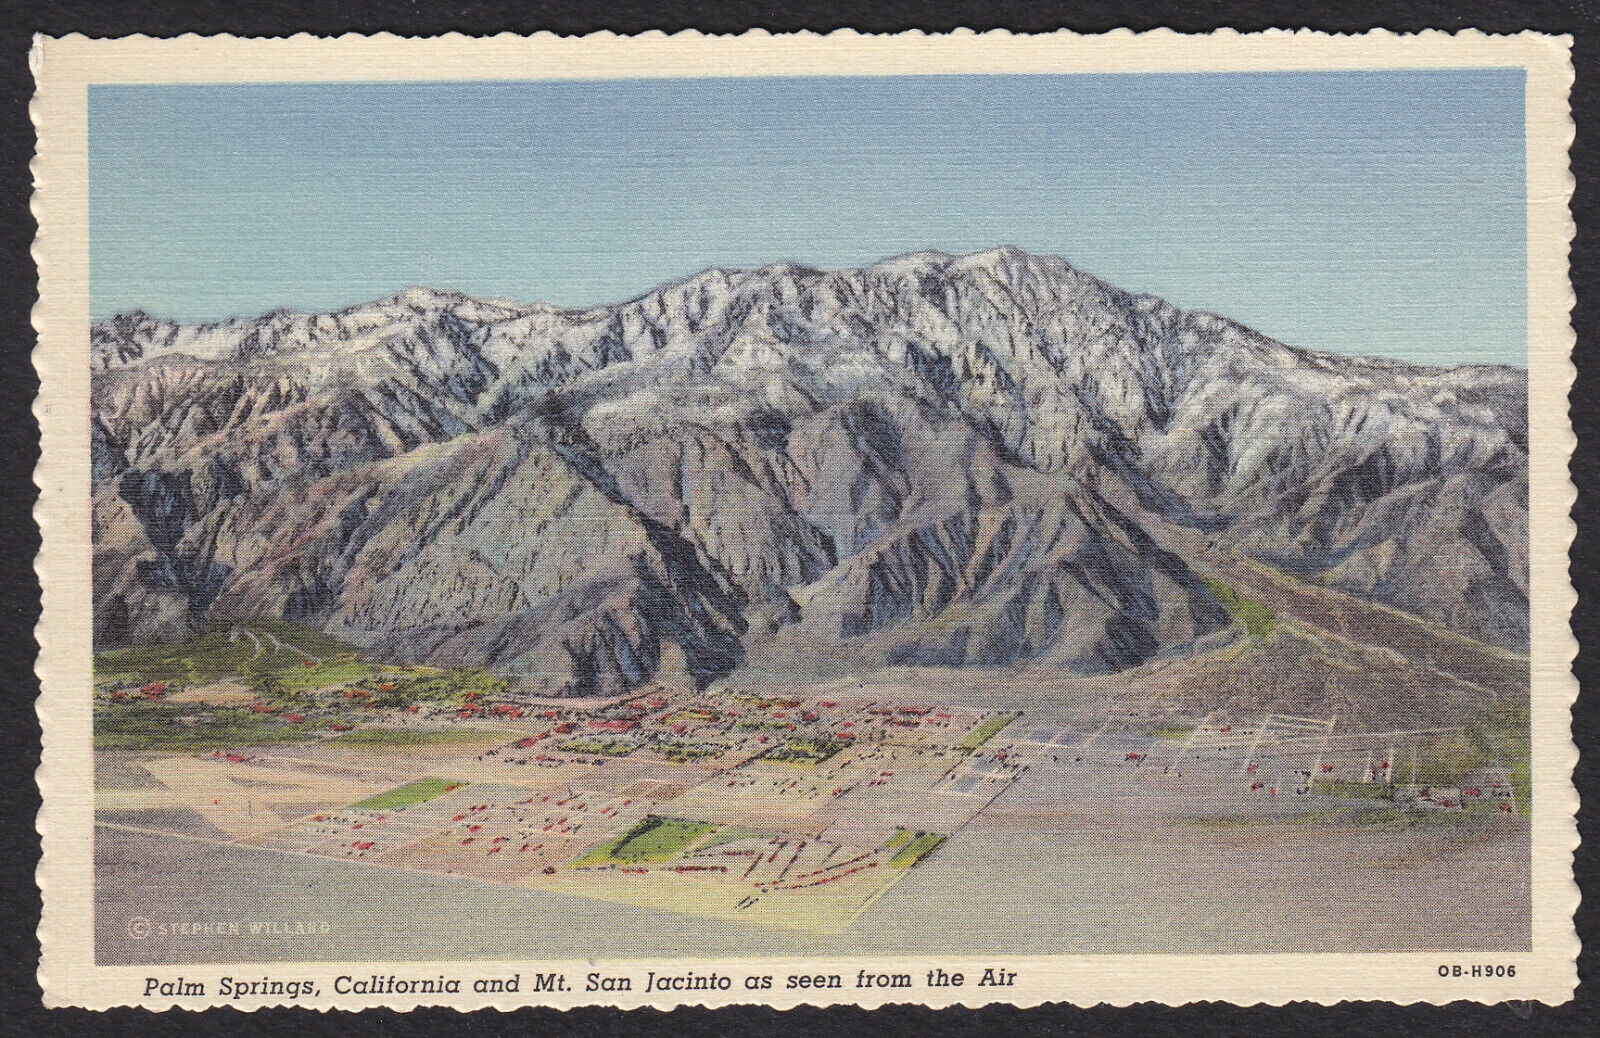 California-Stephen Willard-Palm Springs-Mt San Jacinto-Aerial-Linen Postcard